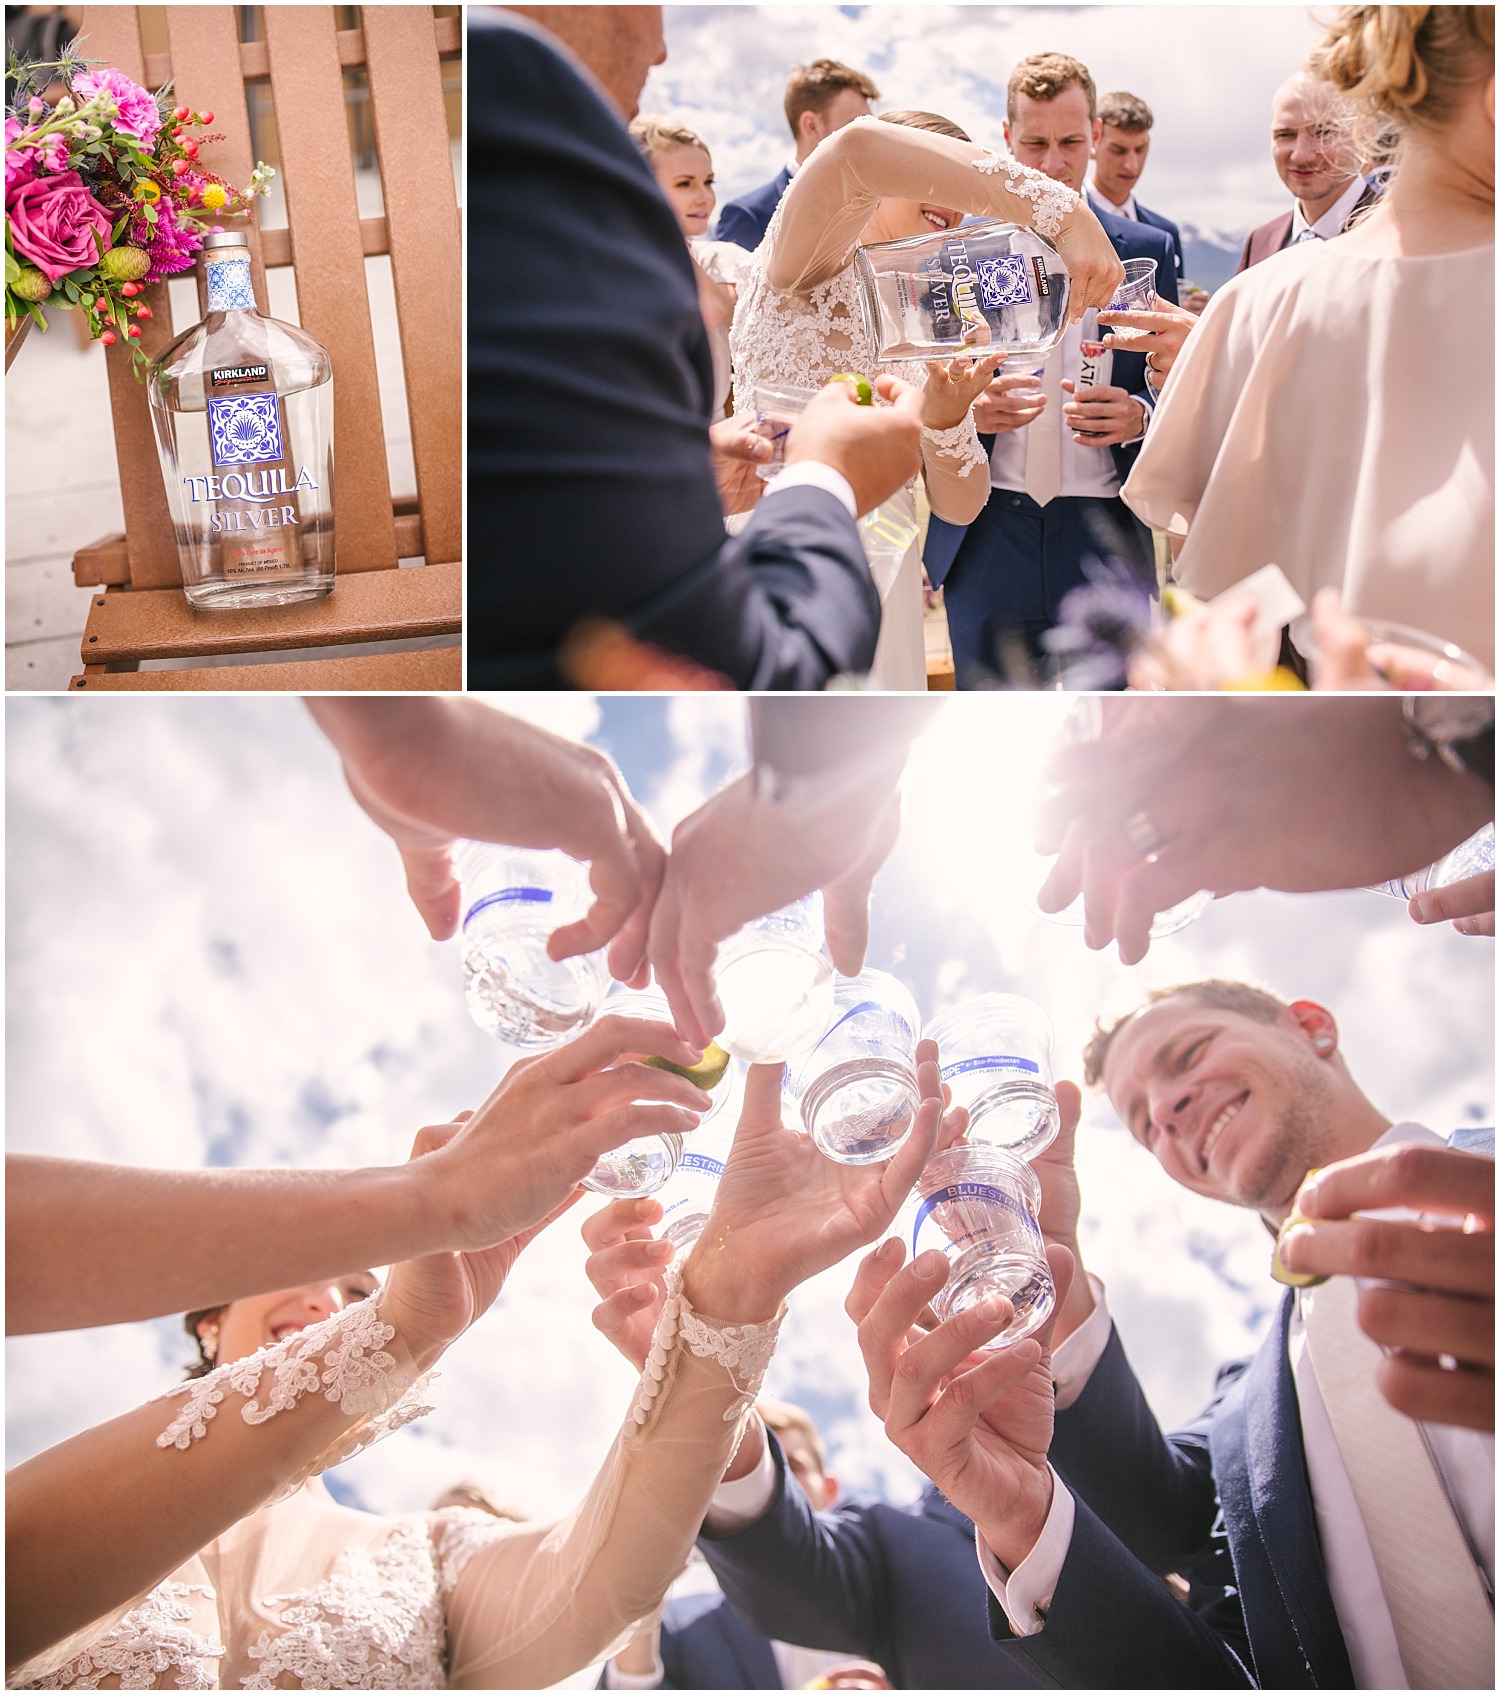 Wedding party does Kirkland Signature Vodka toast before wedding ceremony at the summit of Keystone Colorado